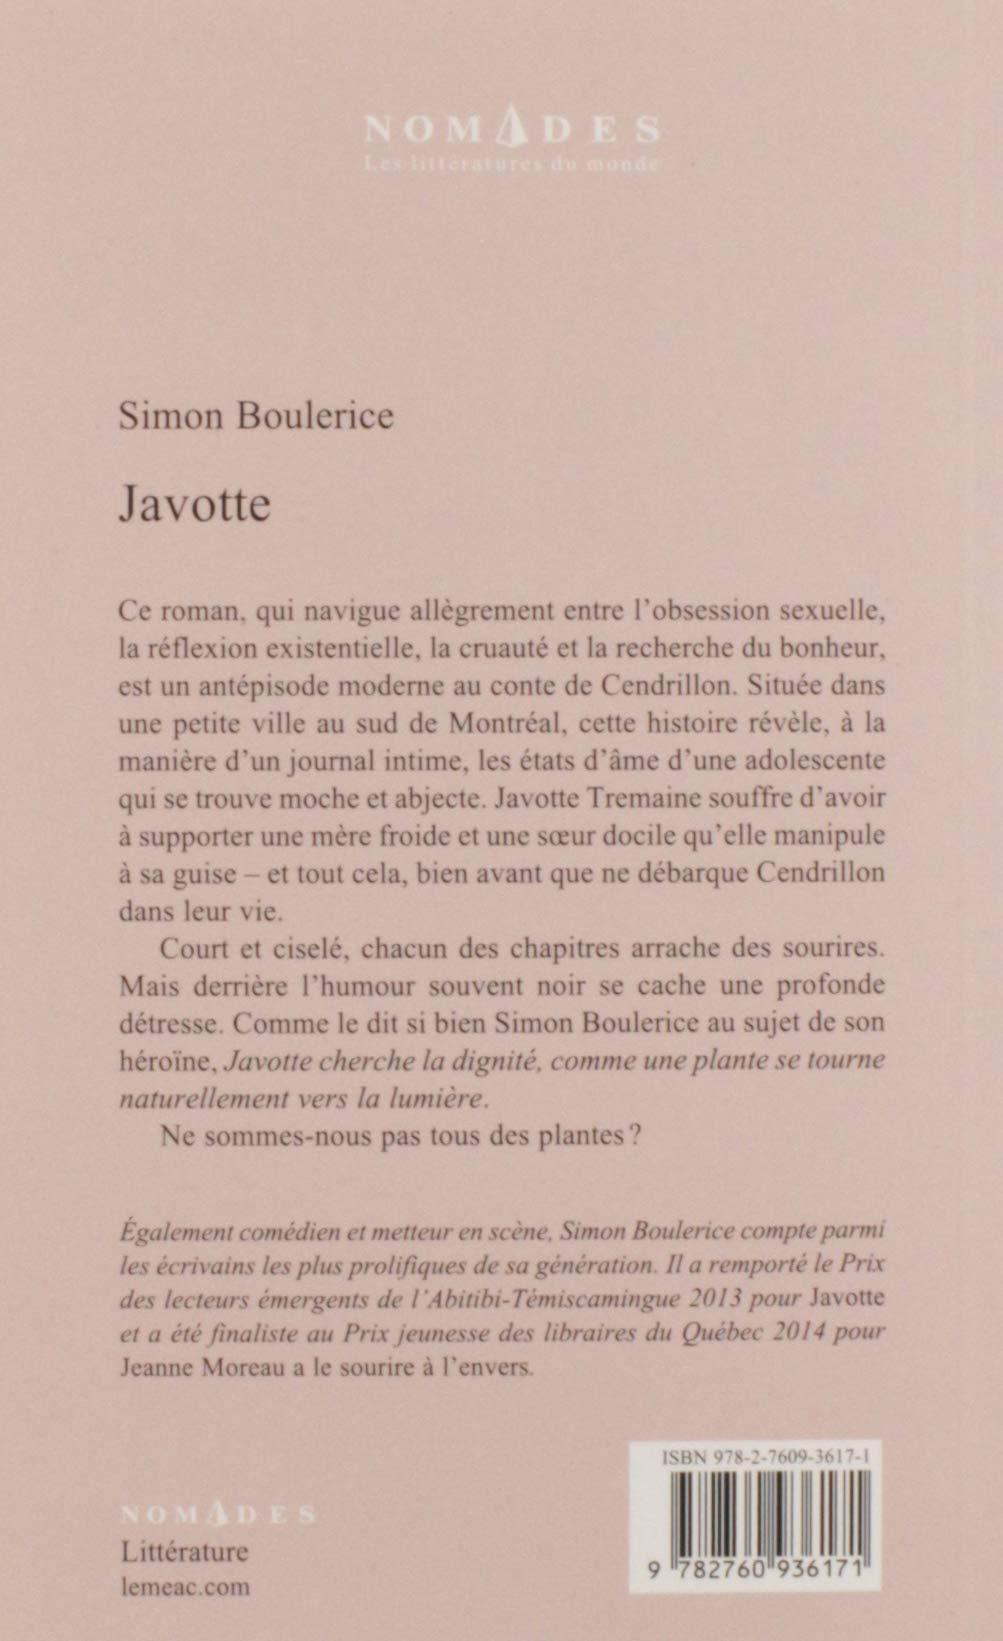 Javotte (Simon Boulerice)